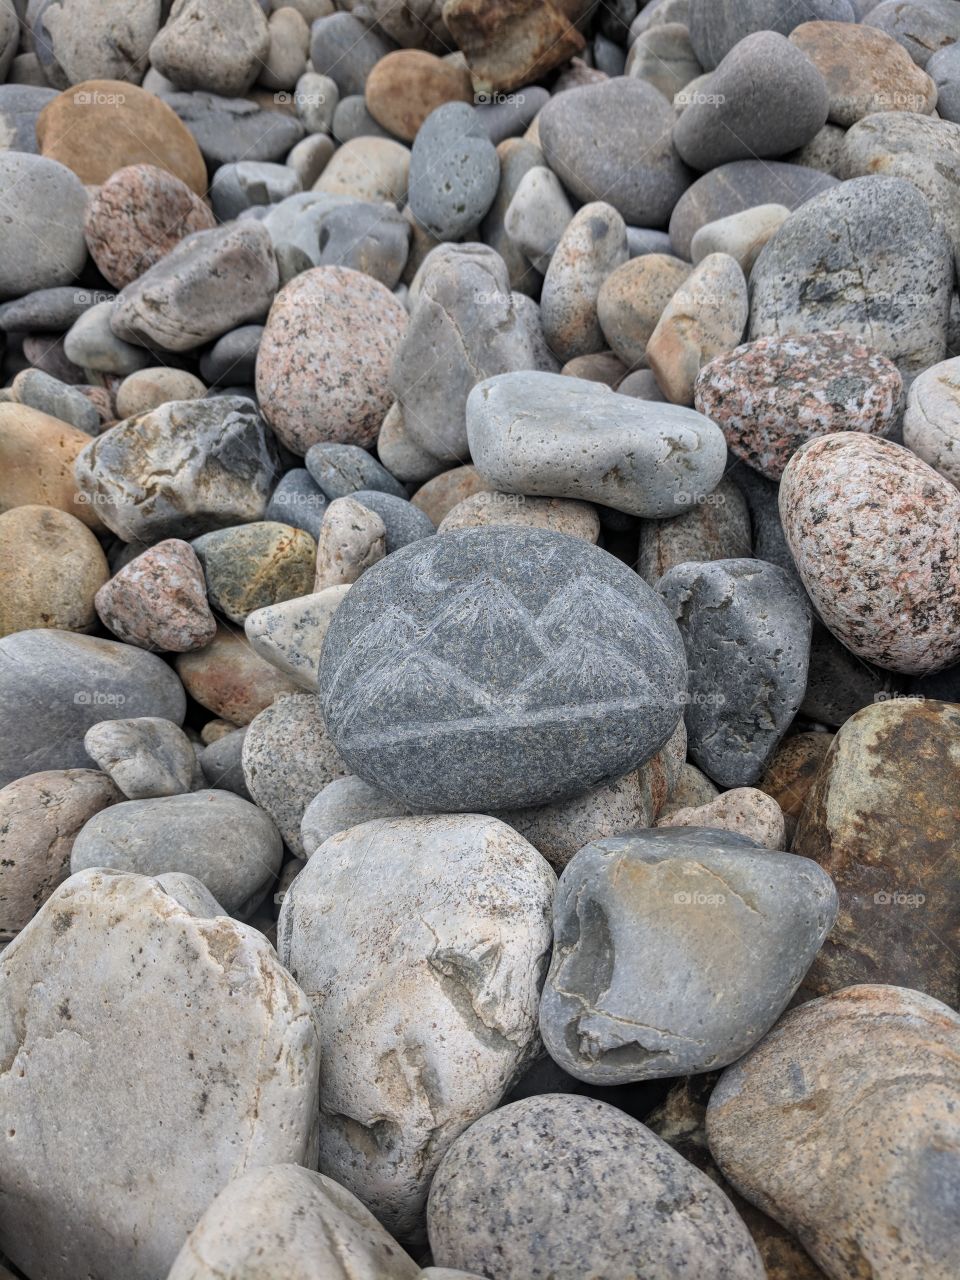 A rock I found at Acadia National park